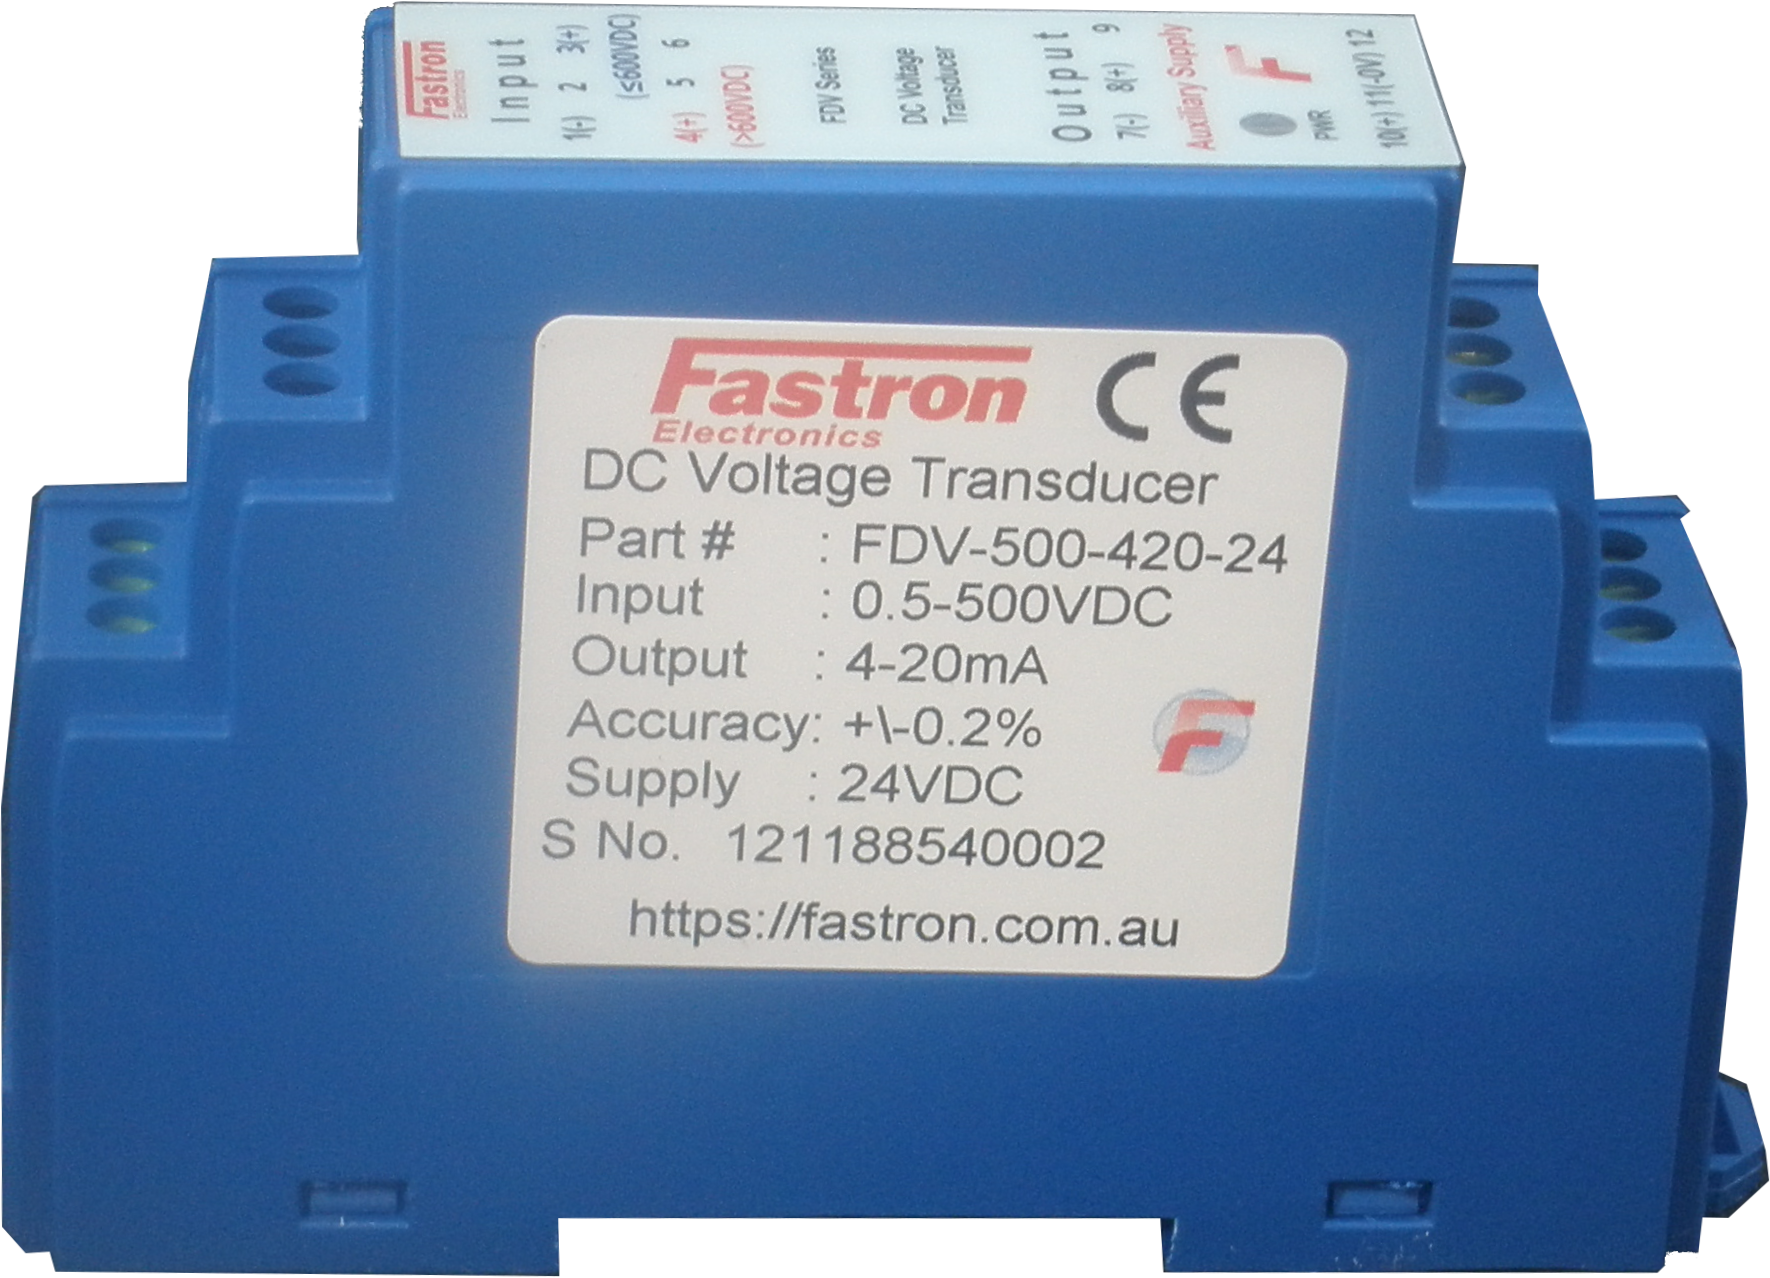 FDV-500-V10-24, DC Voltage Transducer, Din Rail Mount, 0-500VDC, 0-10V output, 24VDC Supply Voltage, 150mS Response